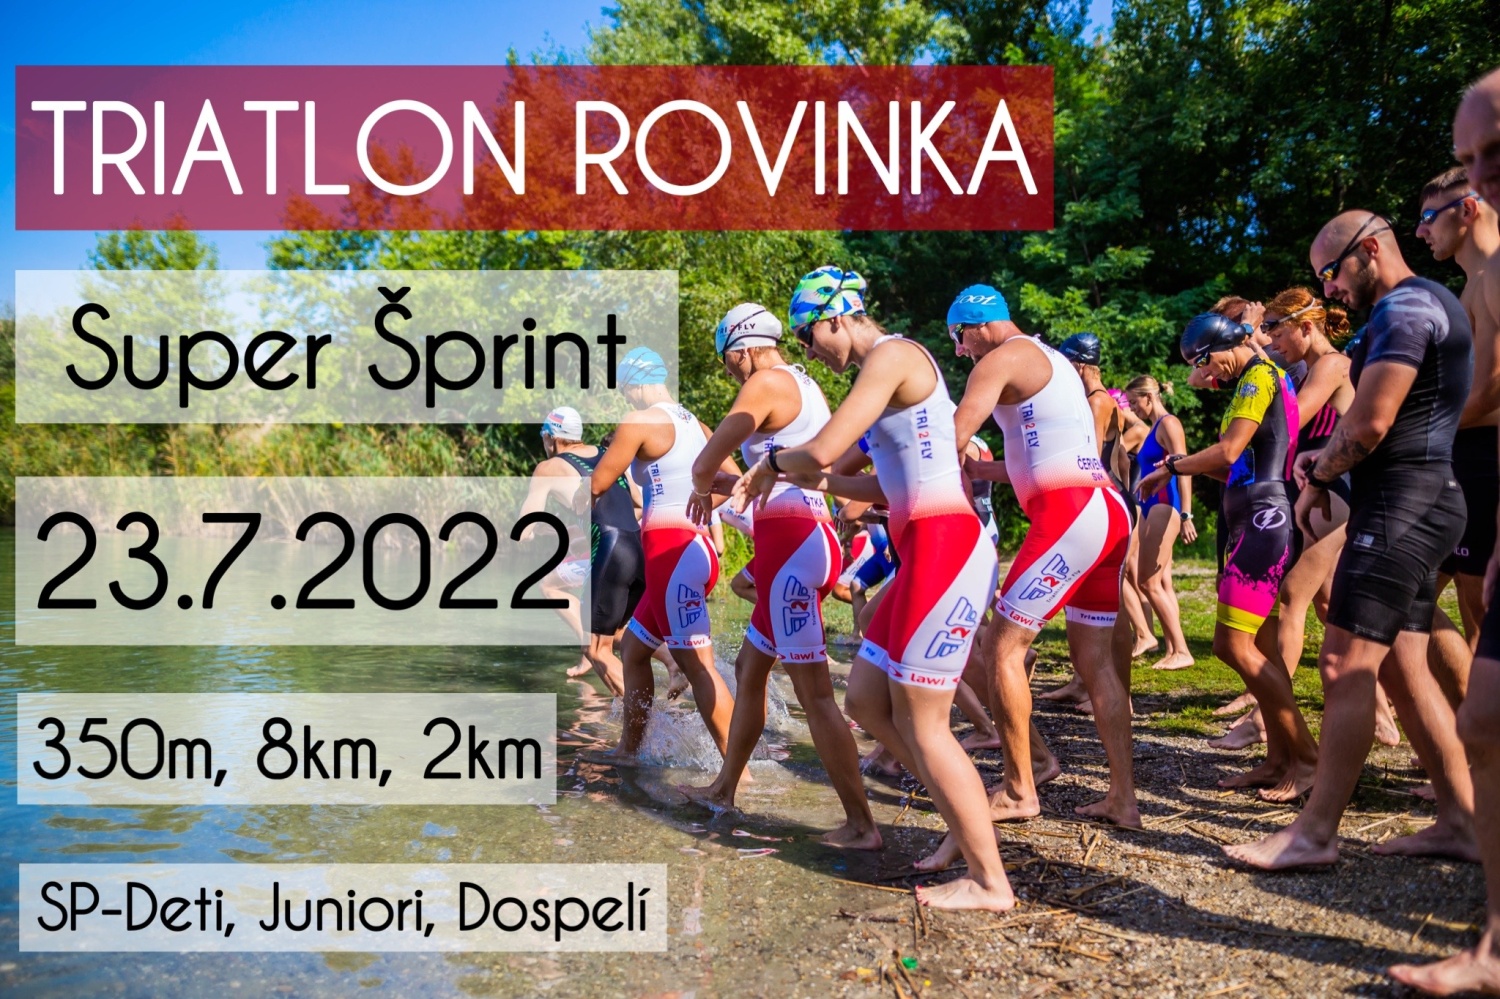 1254-triatlon-rovinka-2022-plagat.JPG